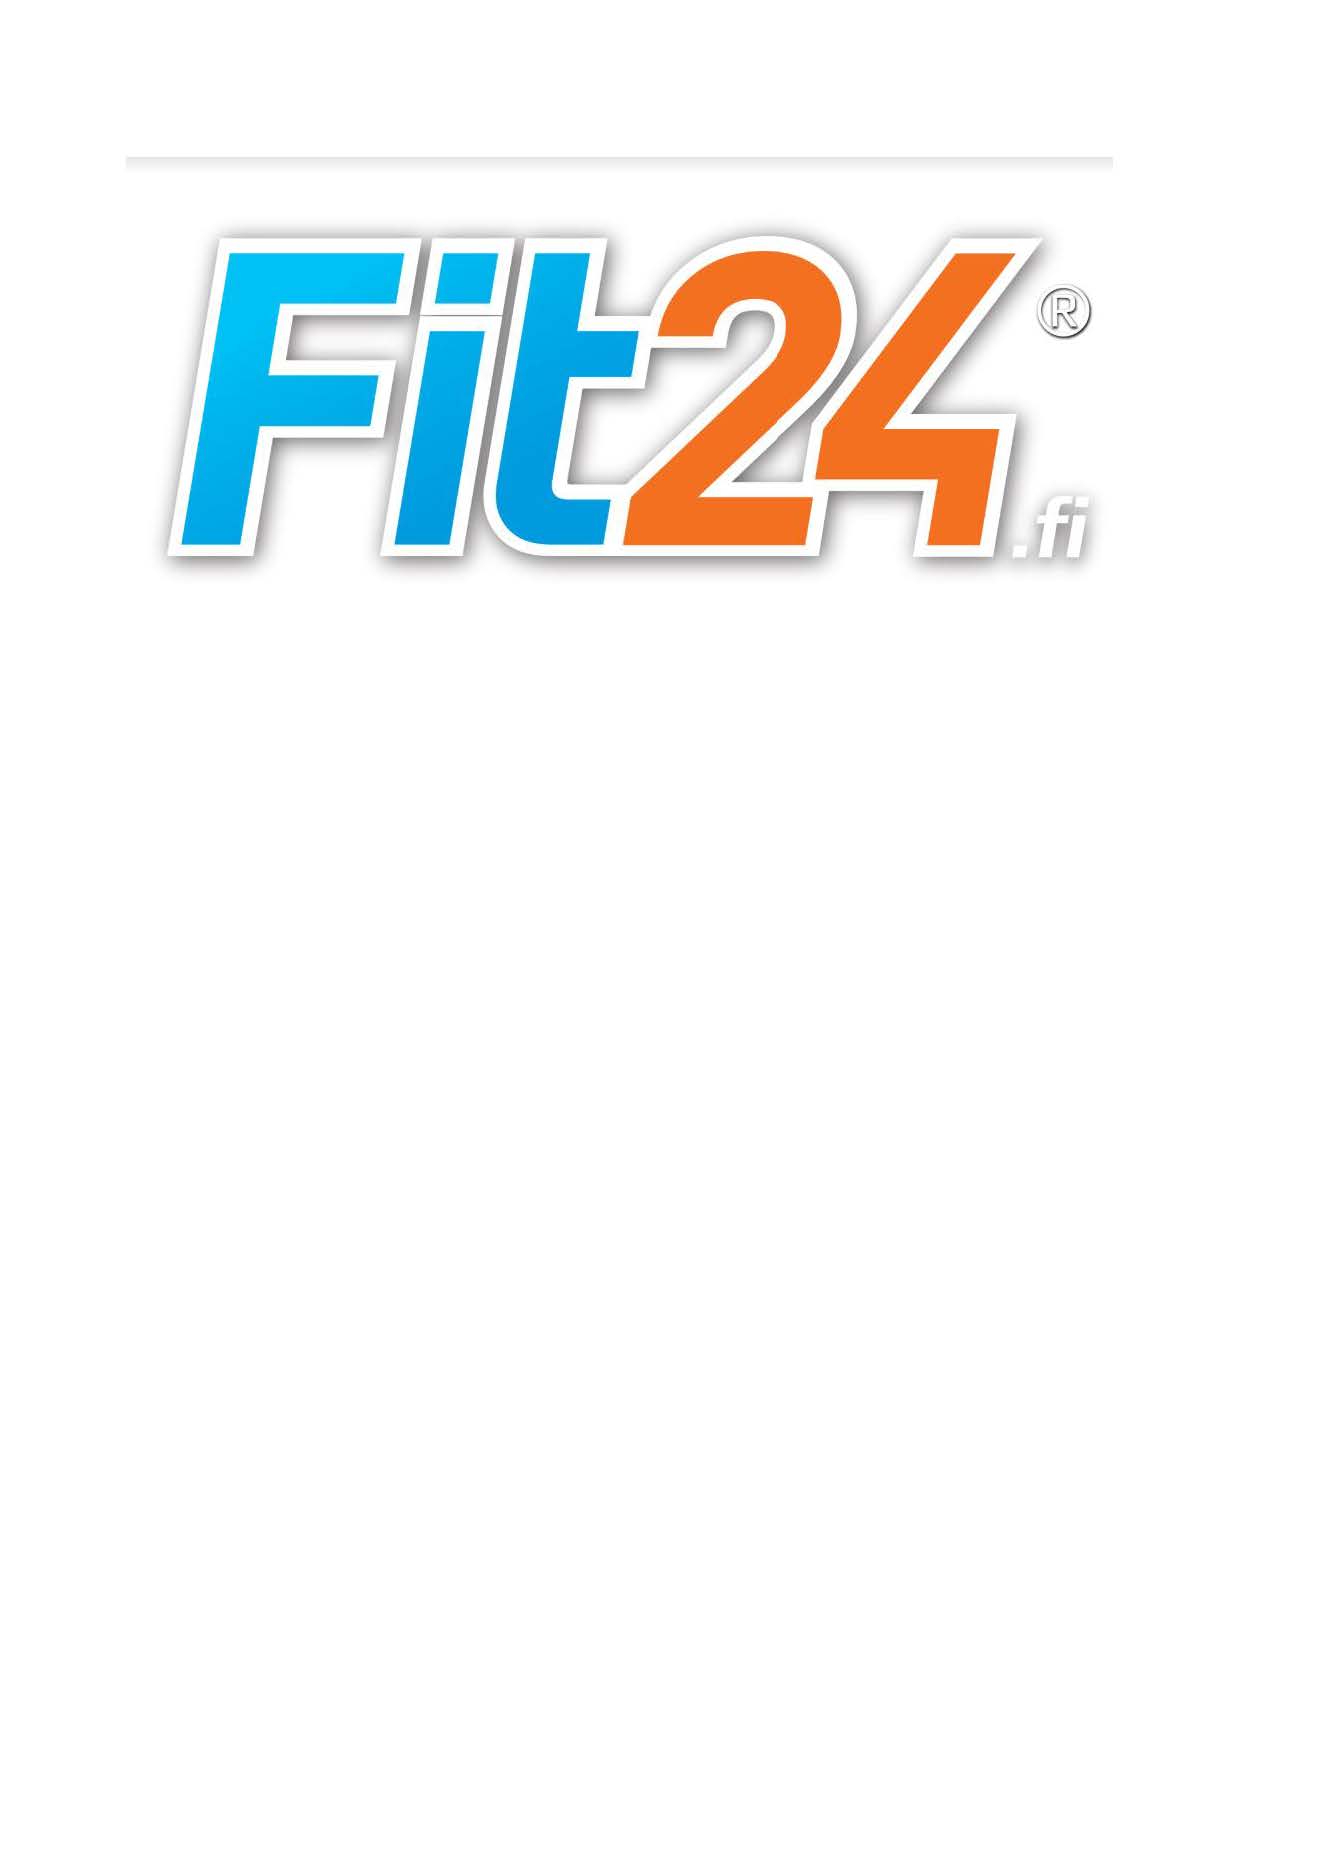 Fit24